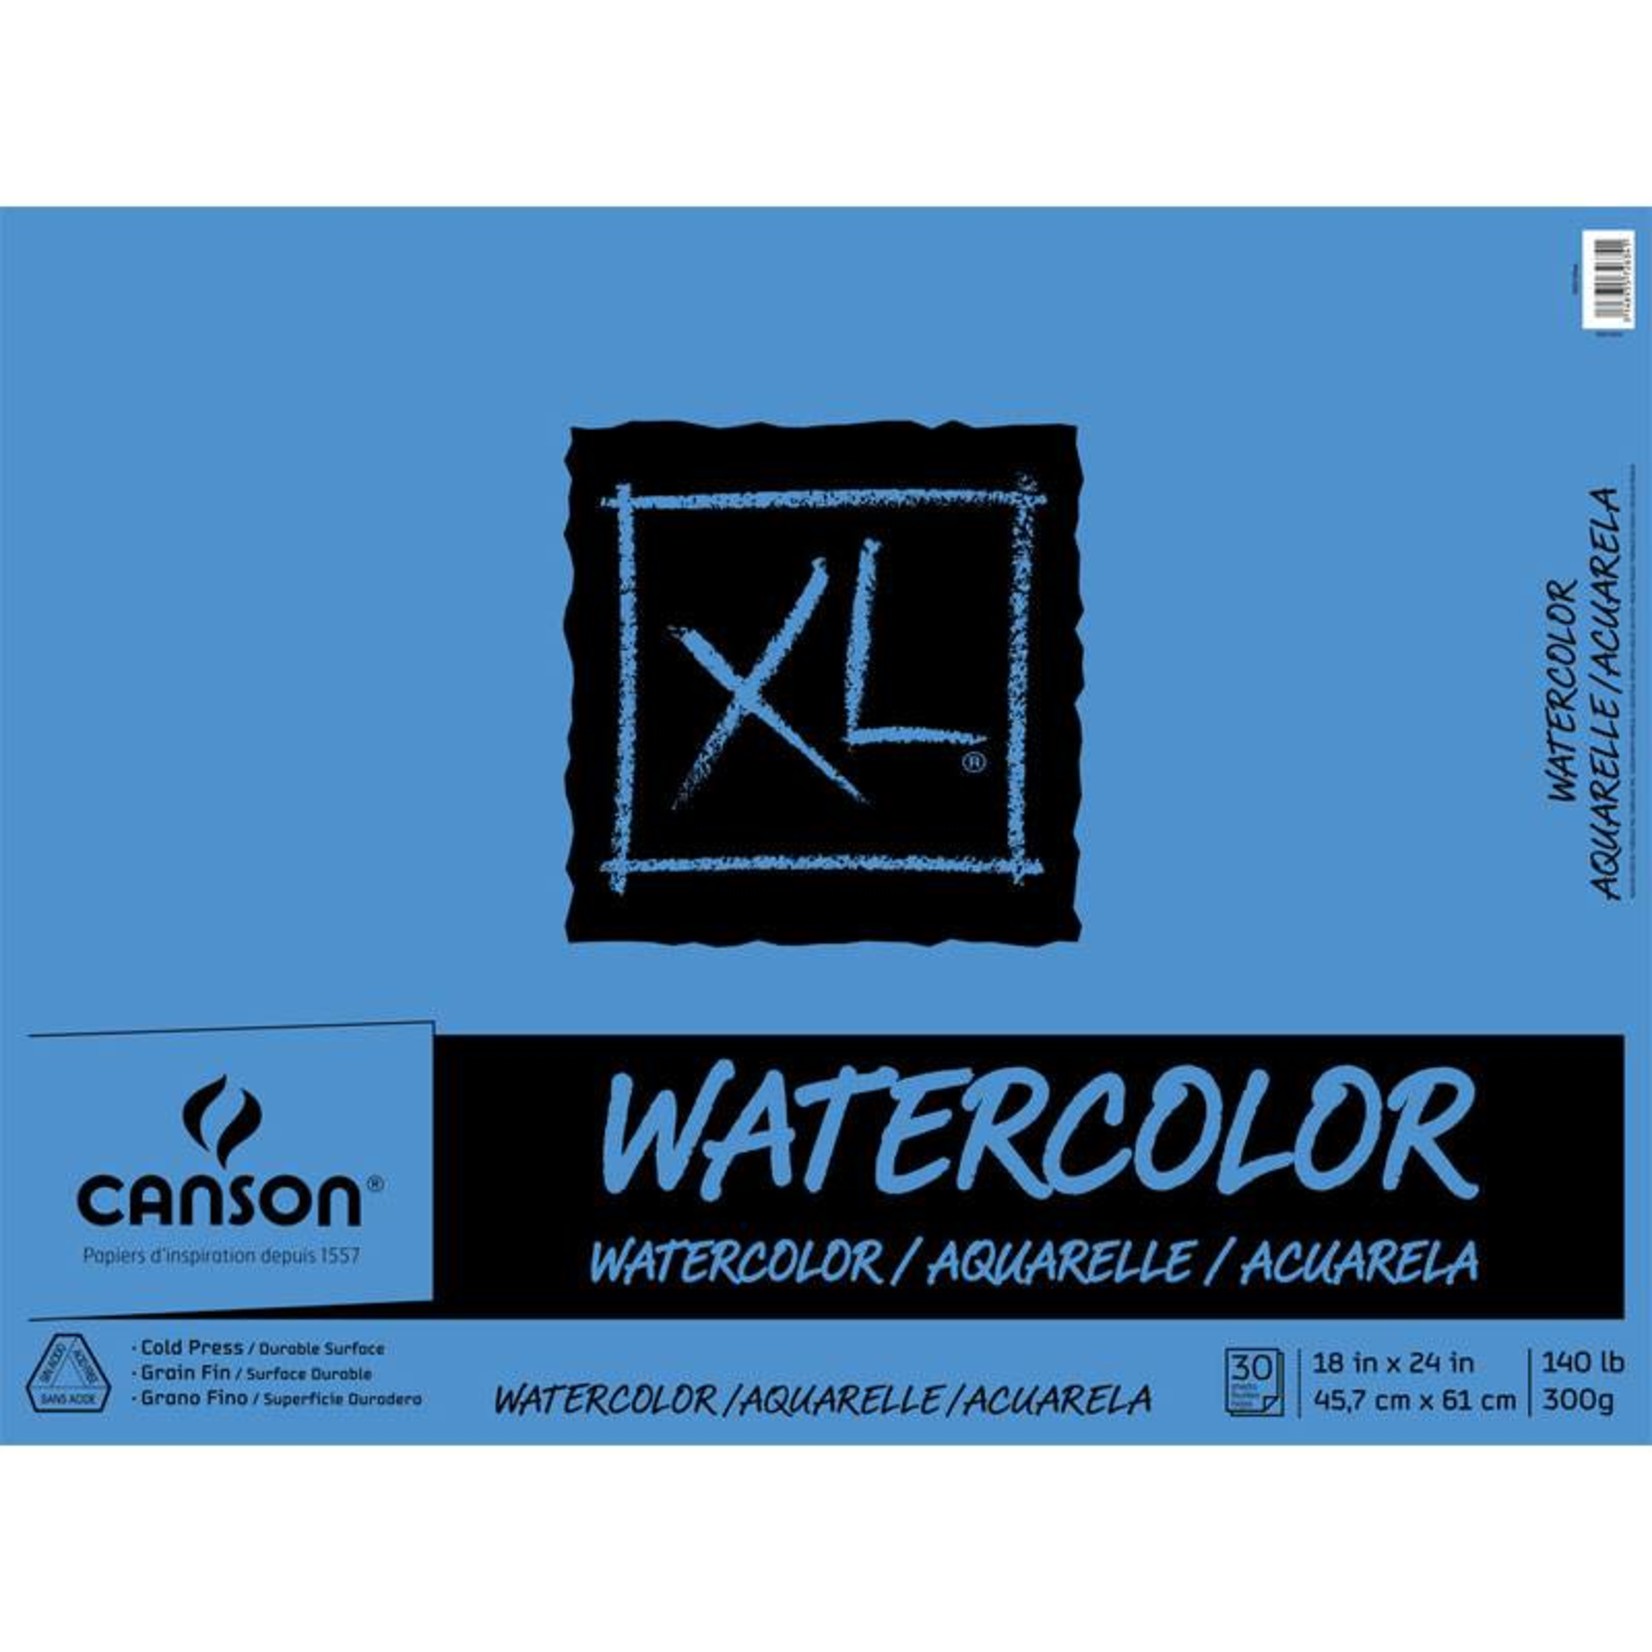 CANSON CANSON XL WATERCOLOUR PAD 140LB 12X18 TAPE BOUND 30/SHEET